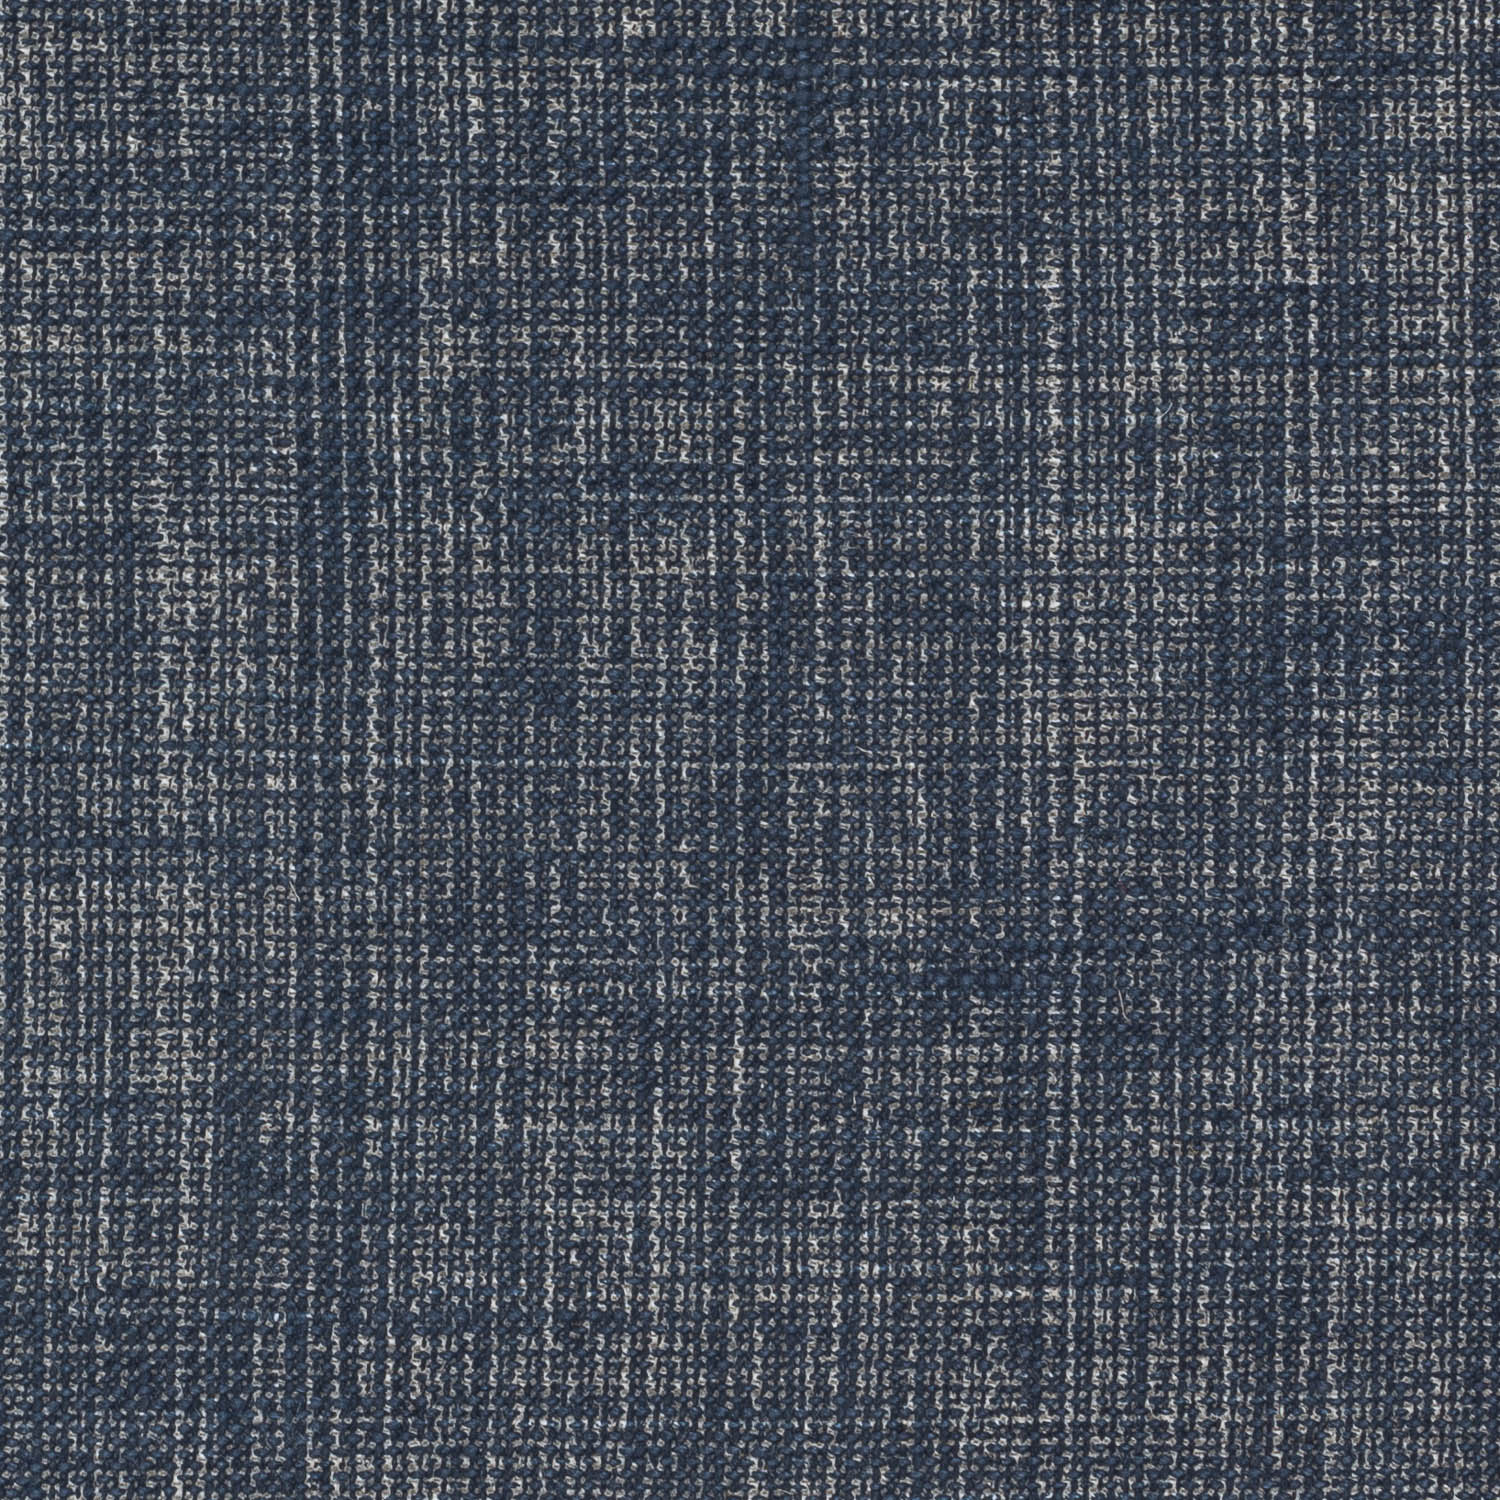 n-032-blue-plain-linen-copy-book-1.jpg